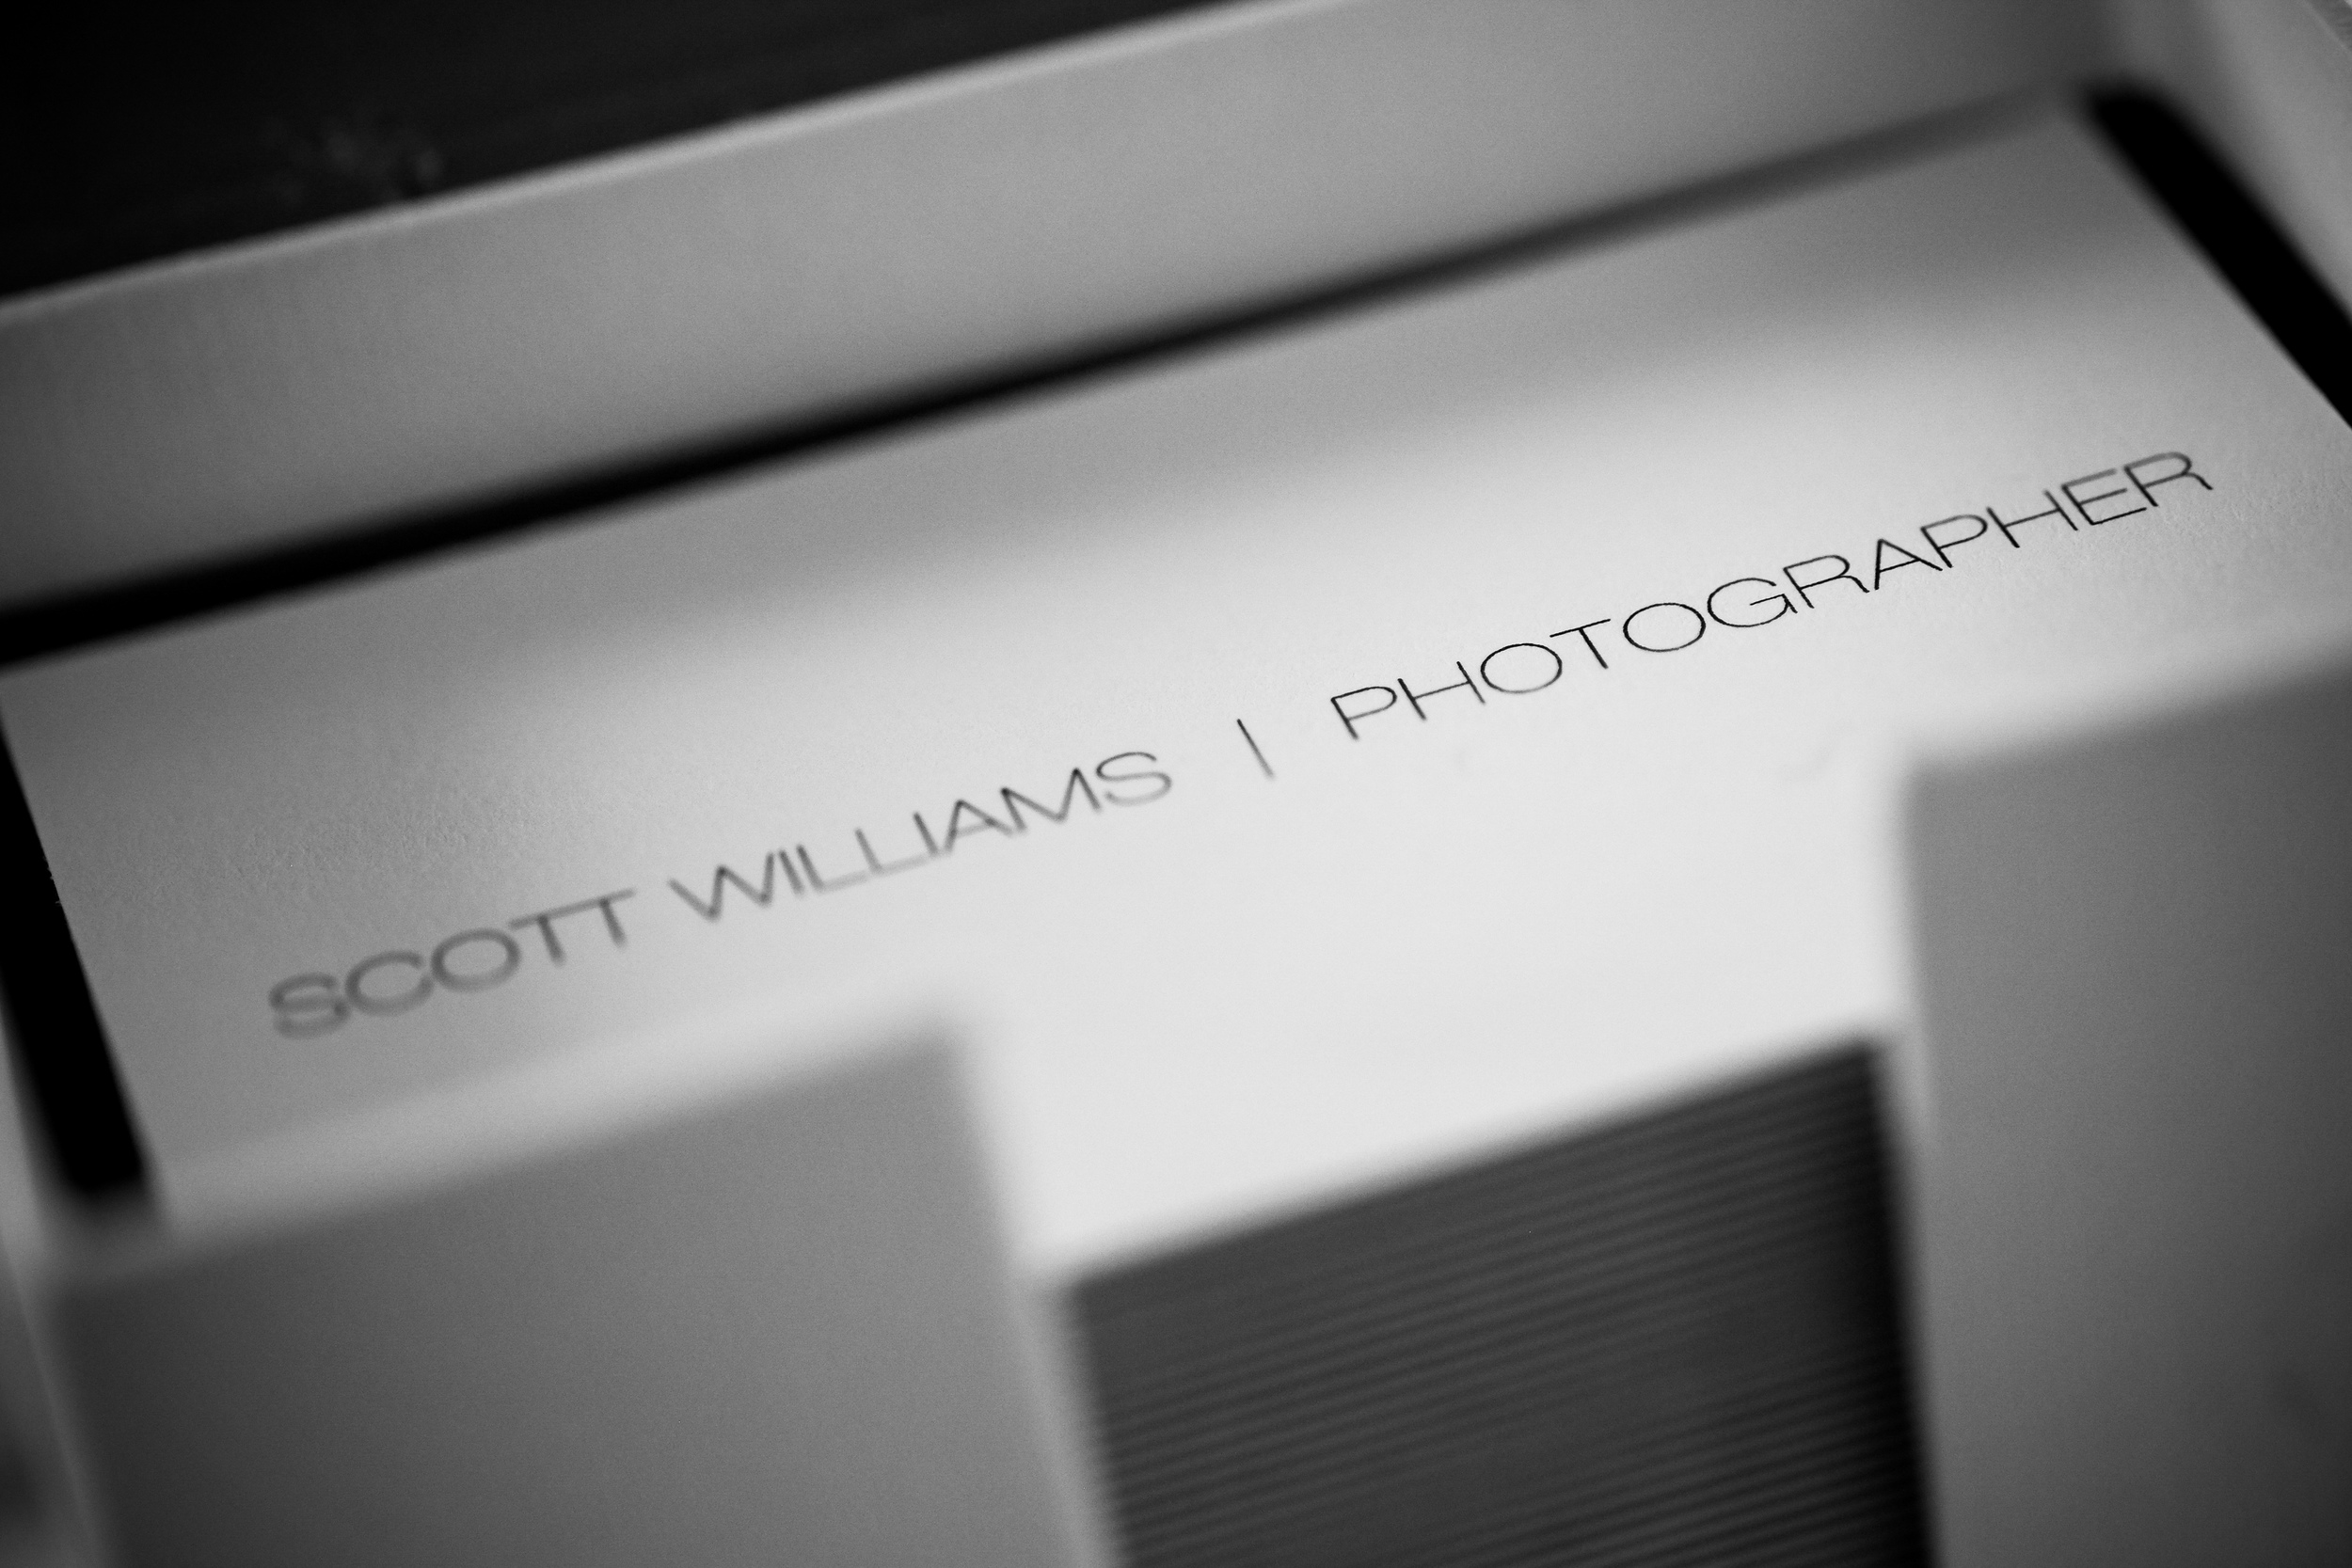 scott-williams-photographer-business-cards-002.jpg